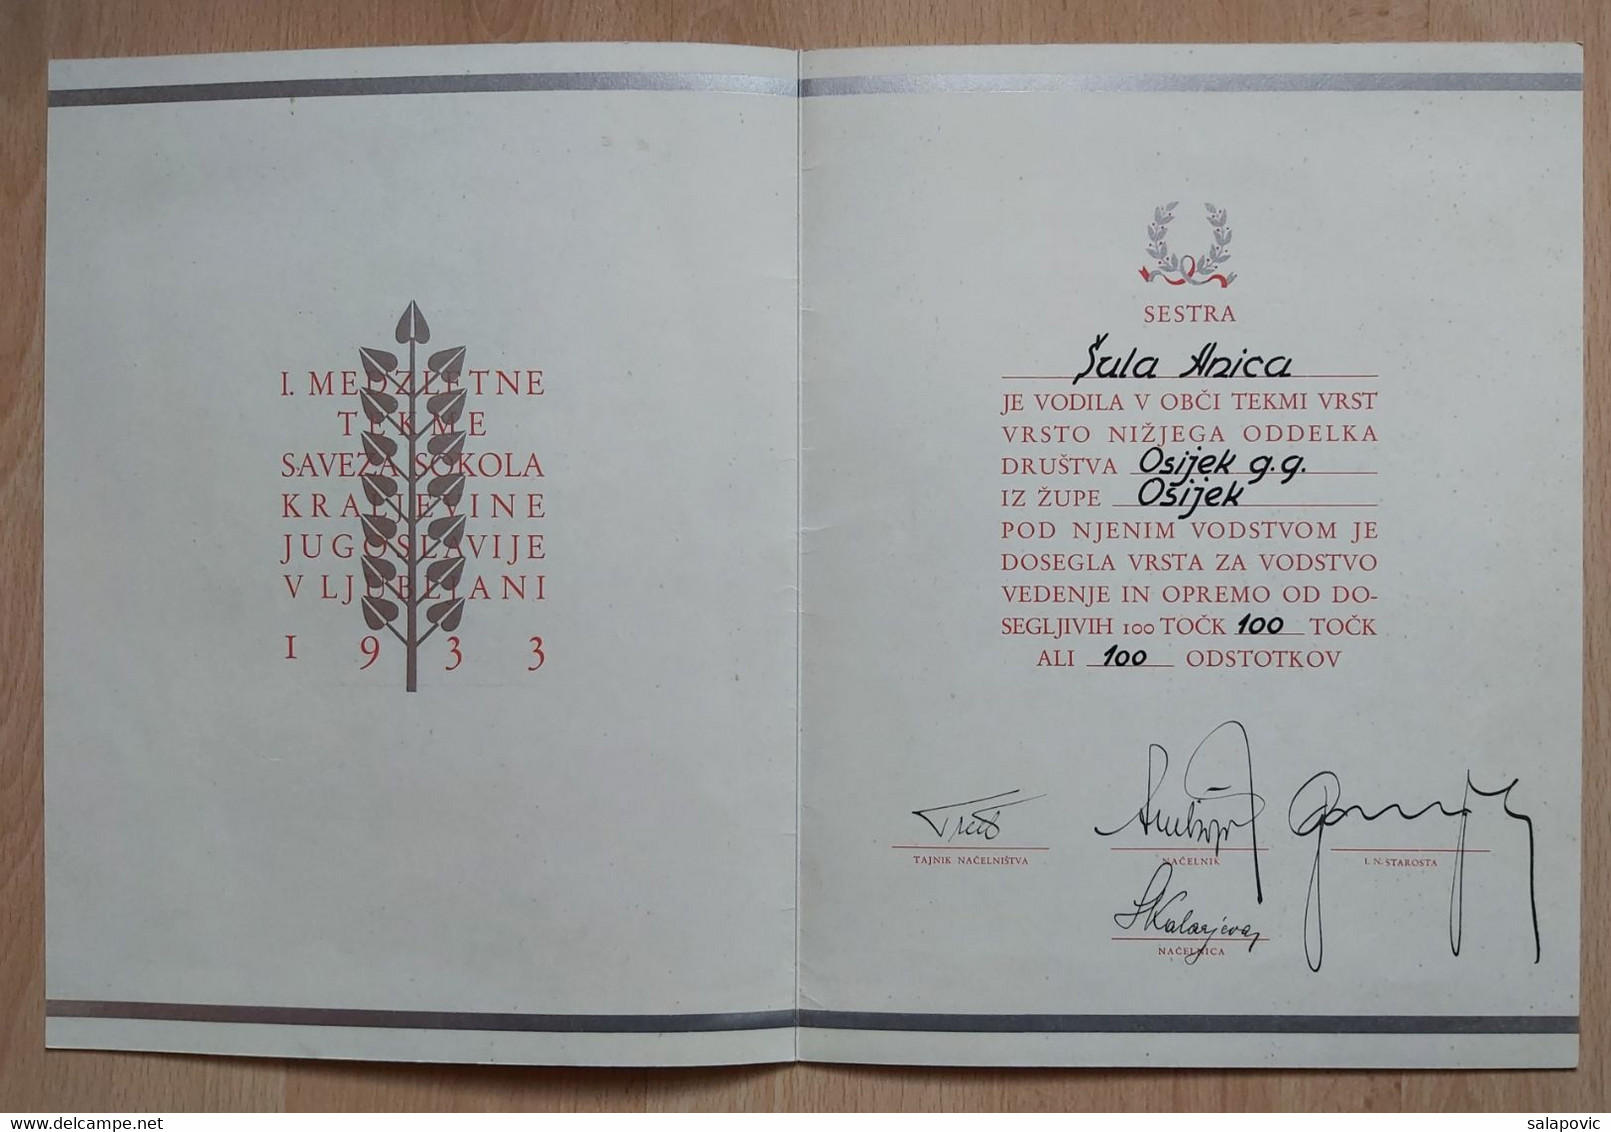 Sokol, Kingdom Of Yugislavia Ljubljana, Slovenia1933  Certificate - Gymnastics